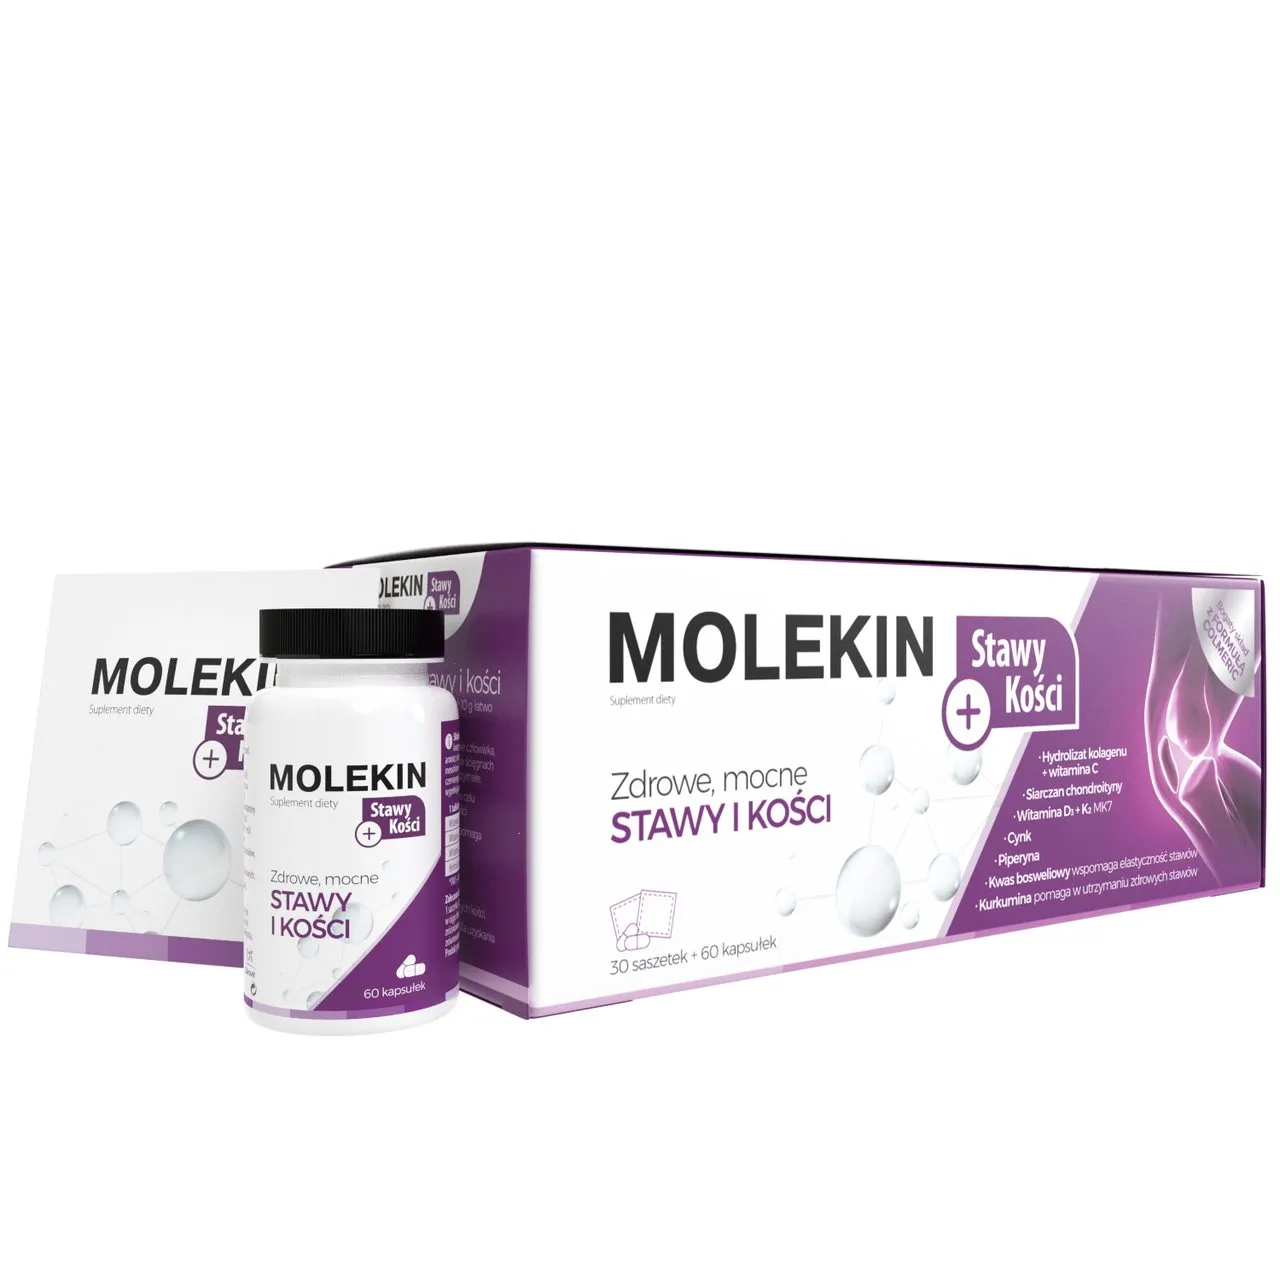 Molekin Stawy + Kości, suplement diety, 30 saszetek + 60 kapsułek